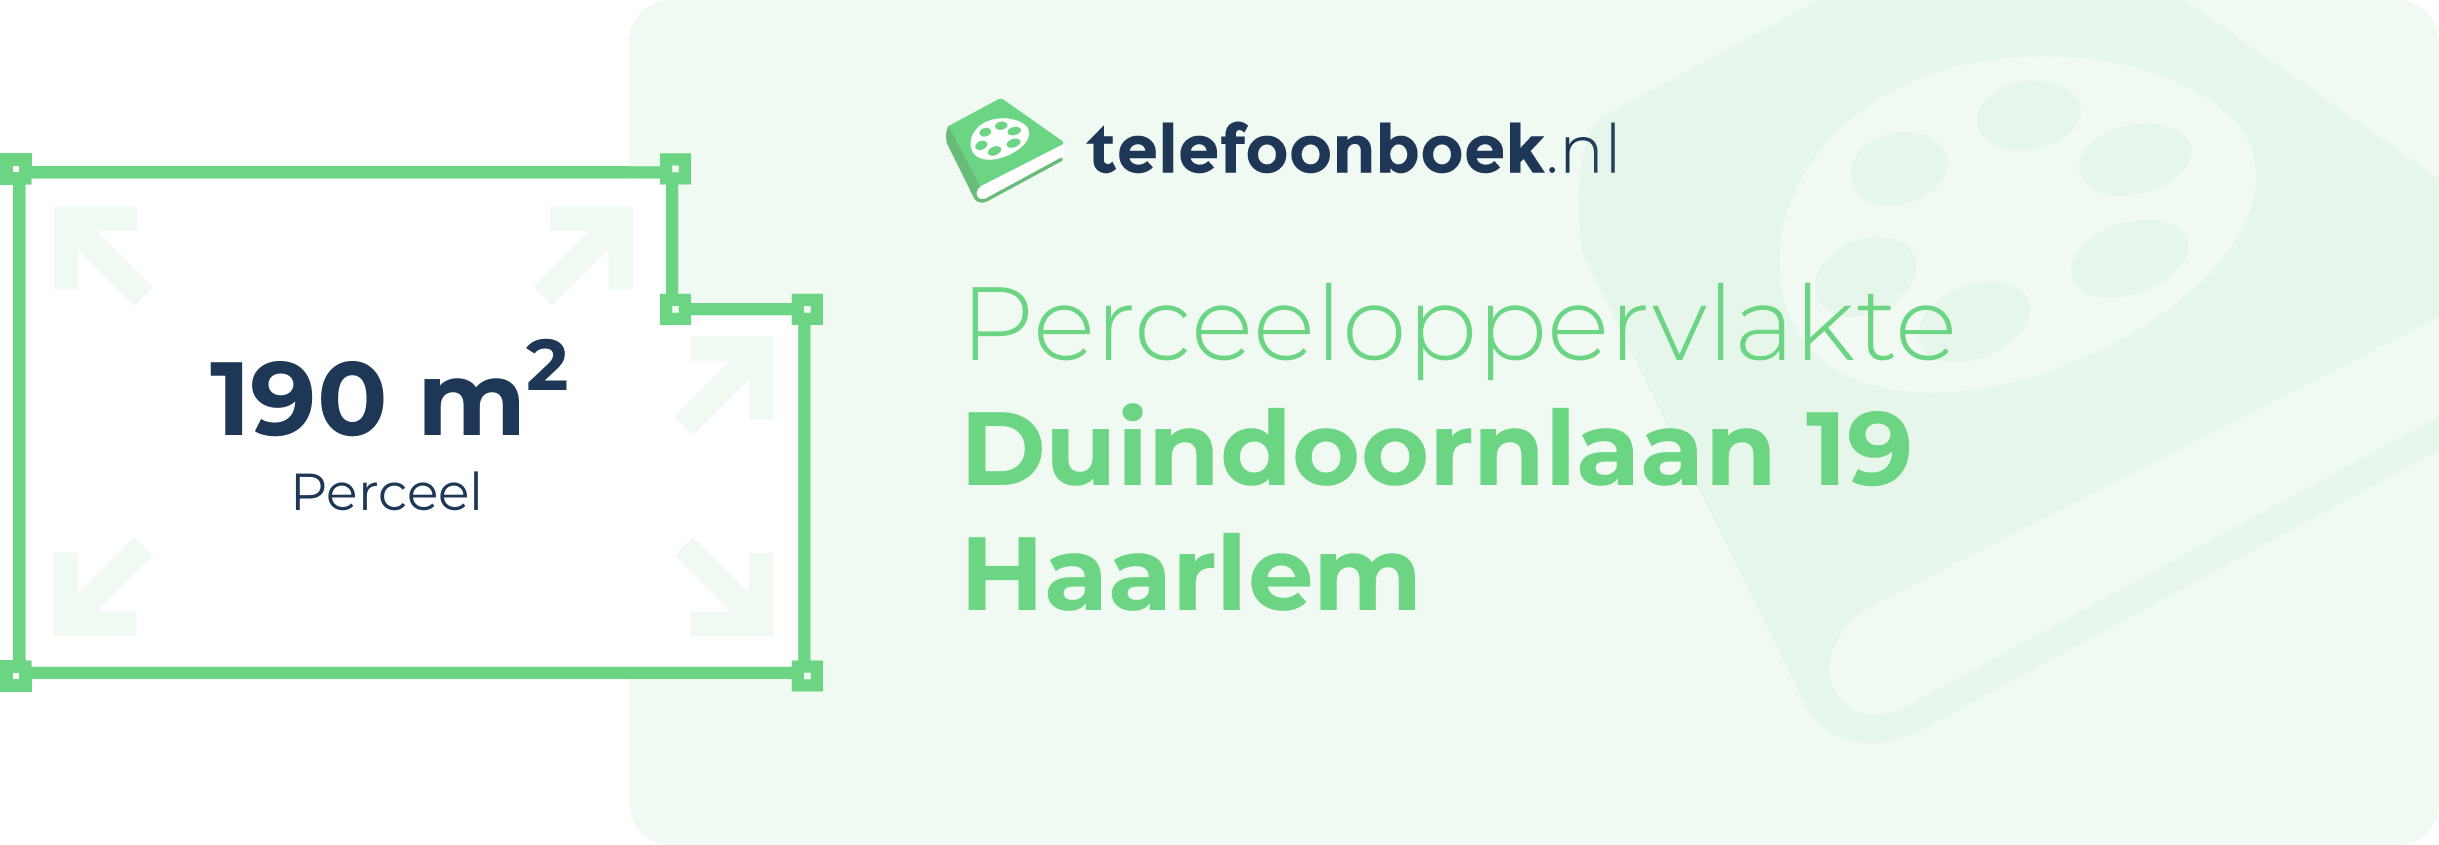 Perceeloppervlakte Duindoornlaan 19 Haarlem